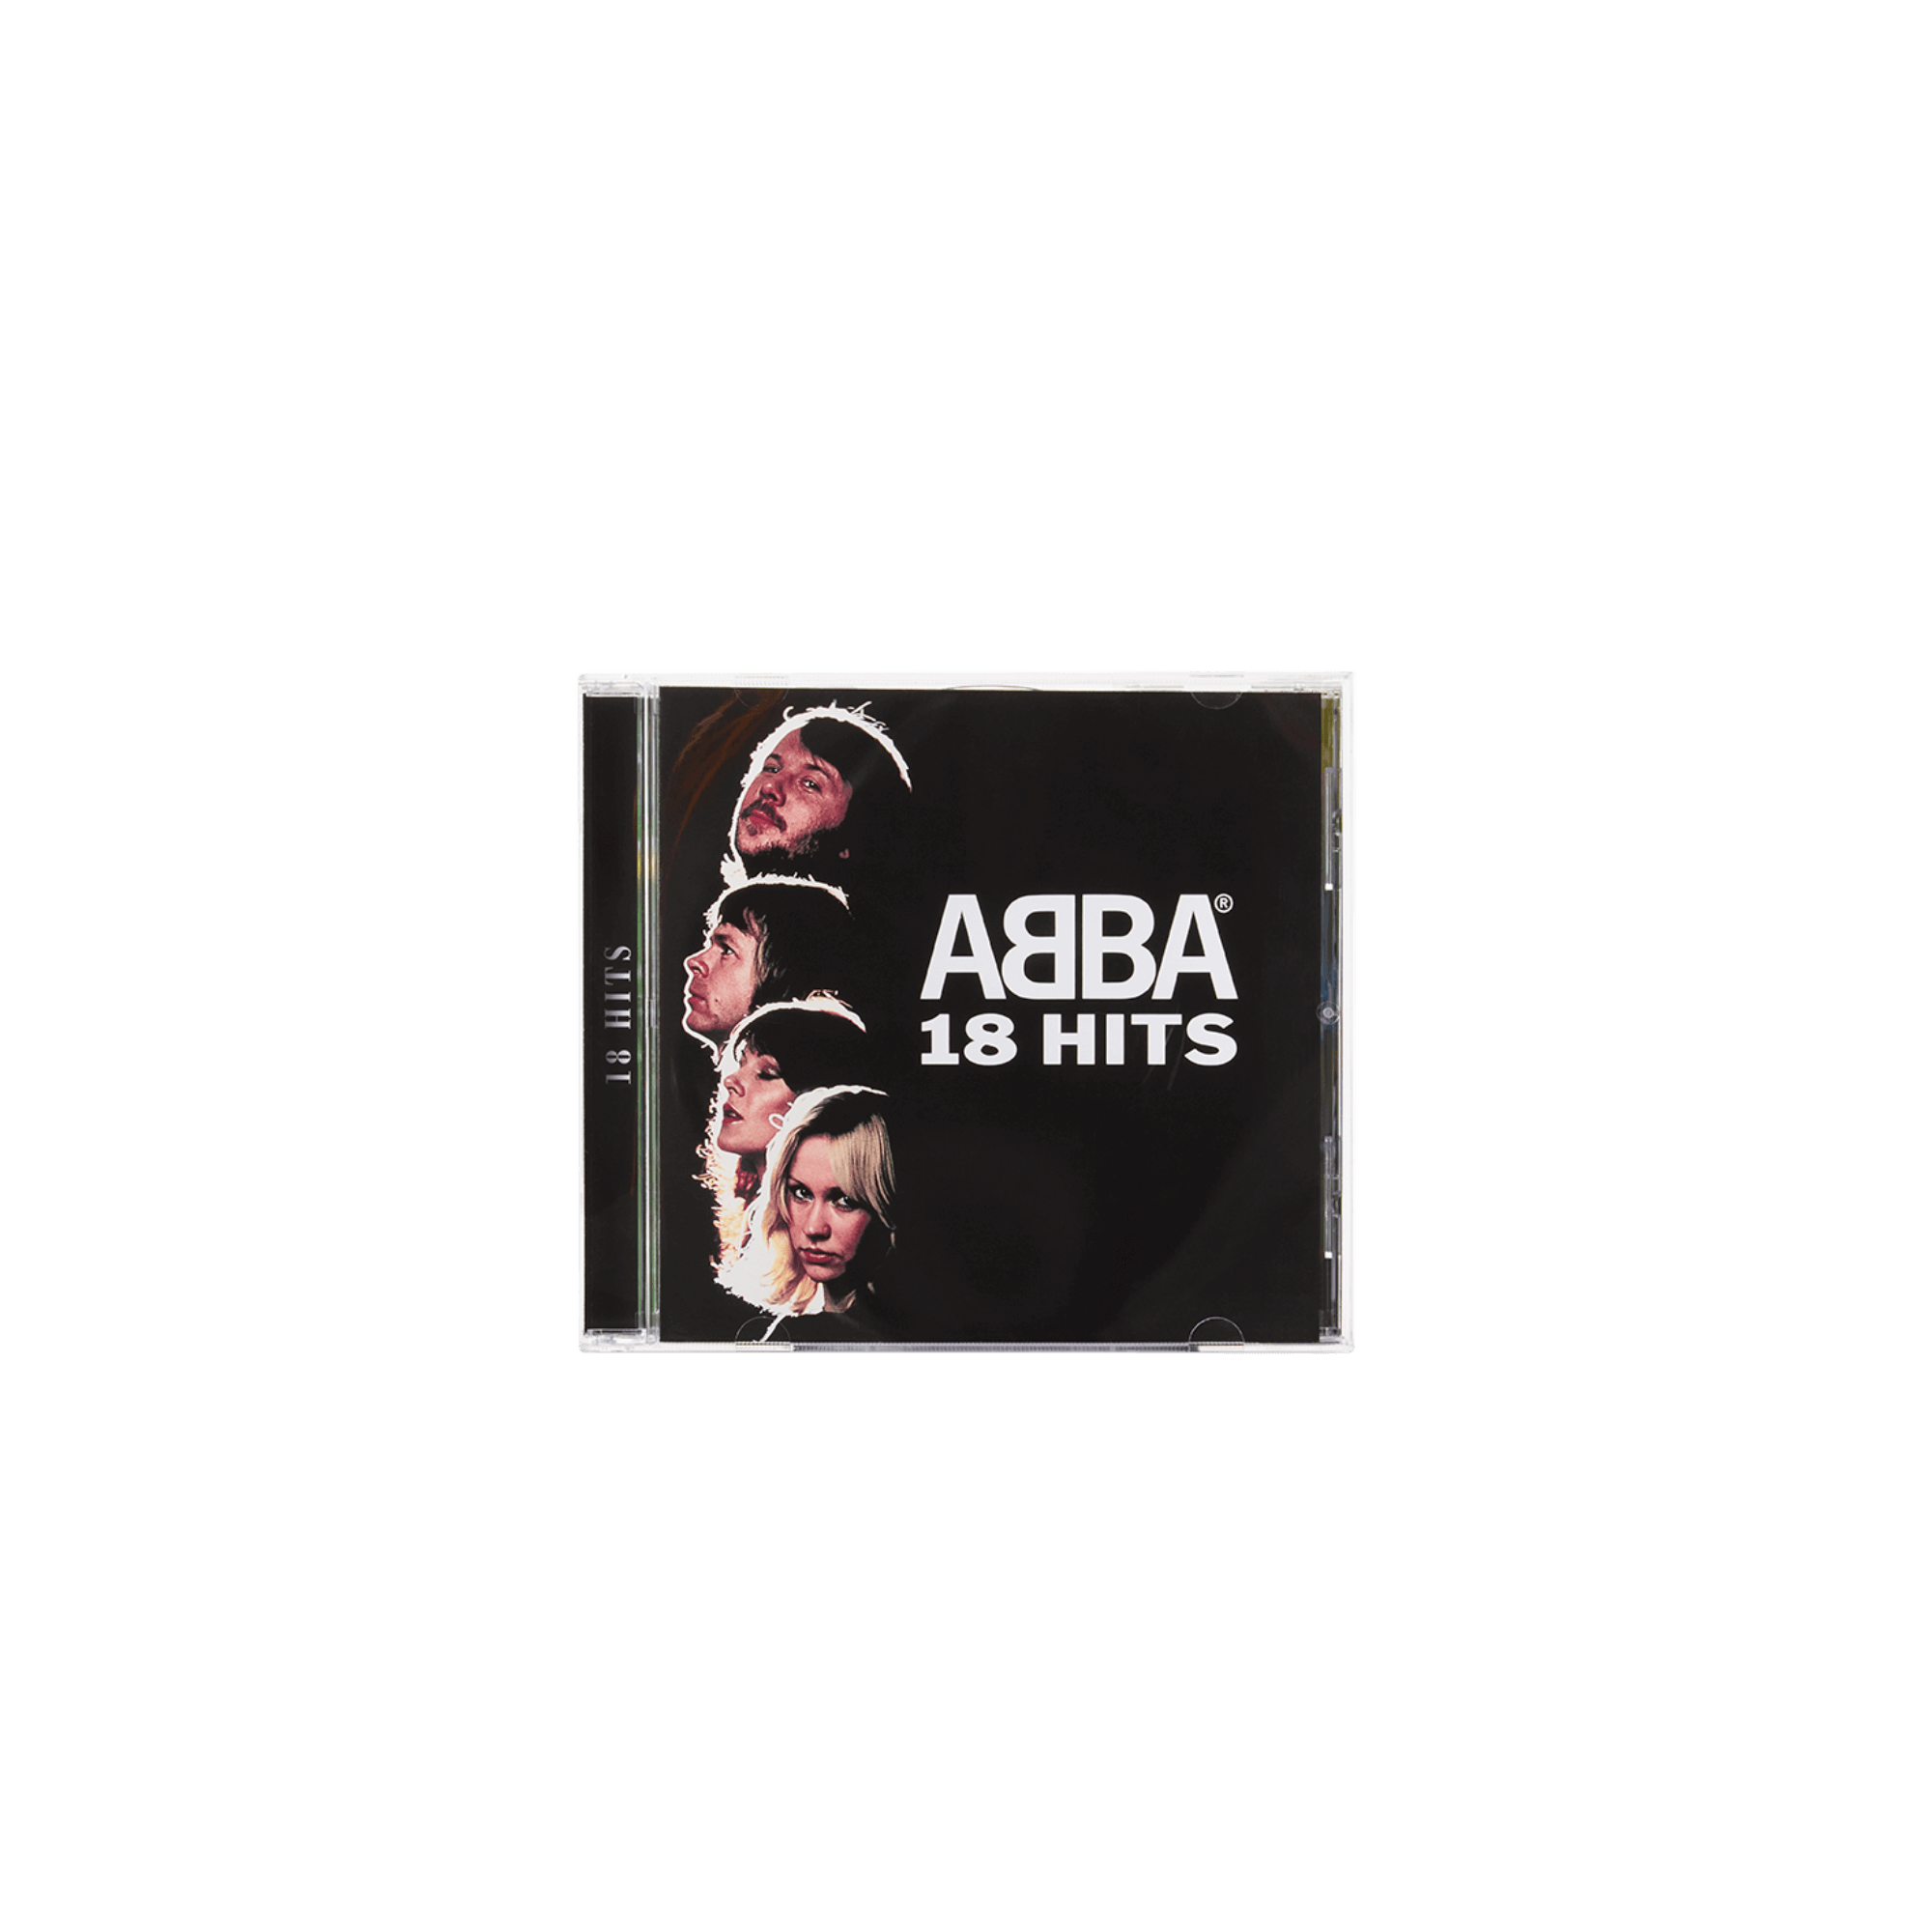 ABBA 18 Hits CD